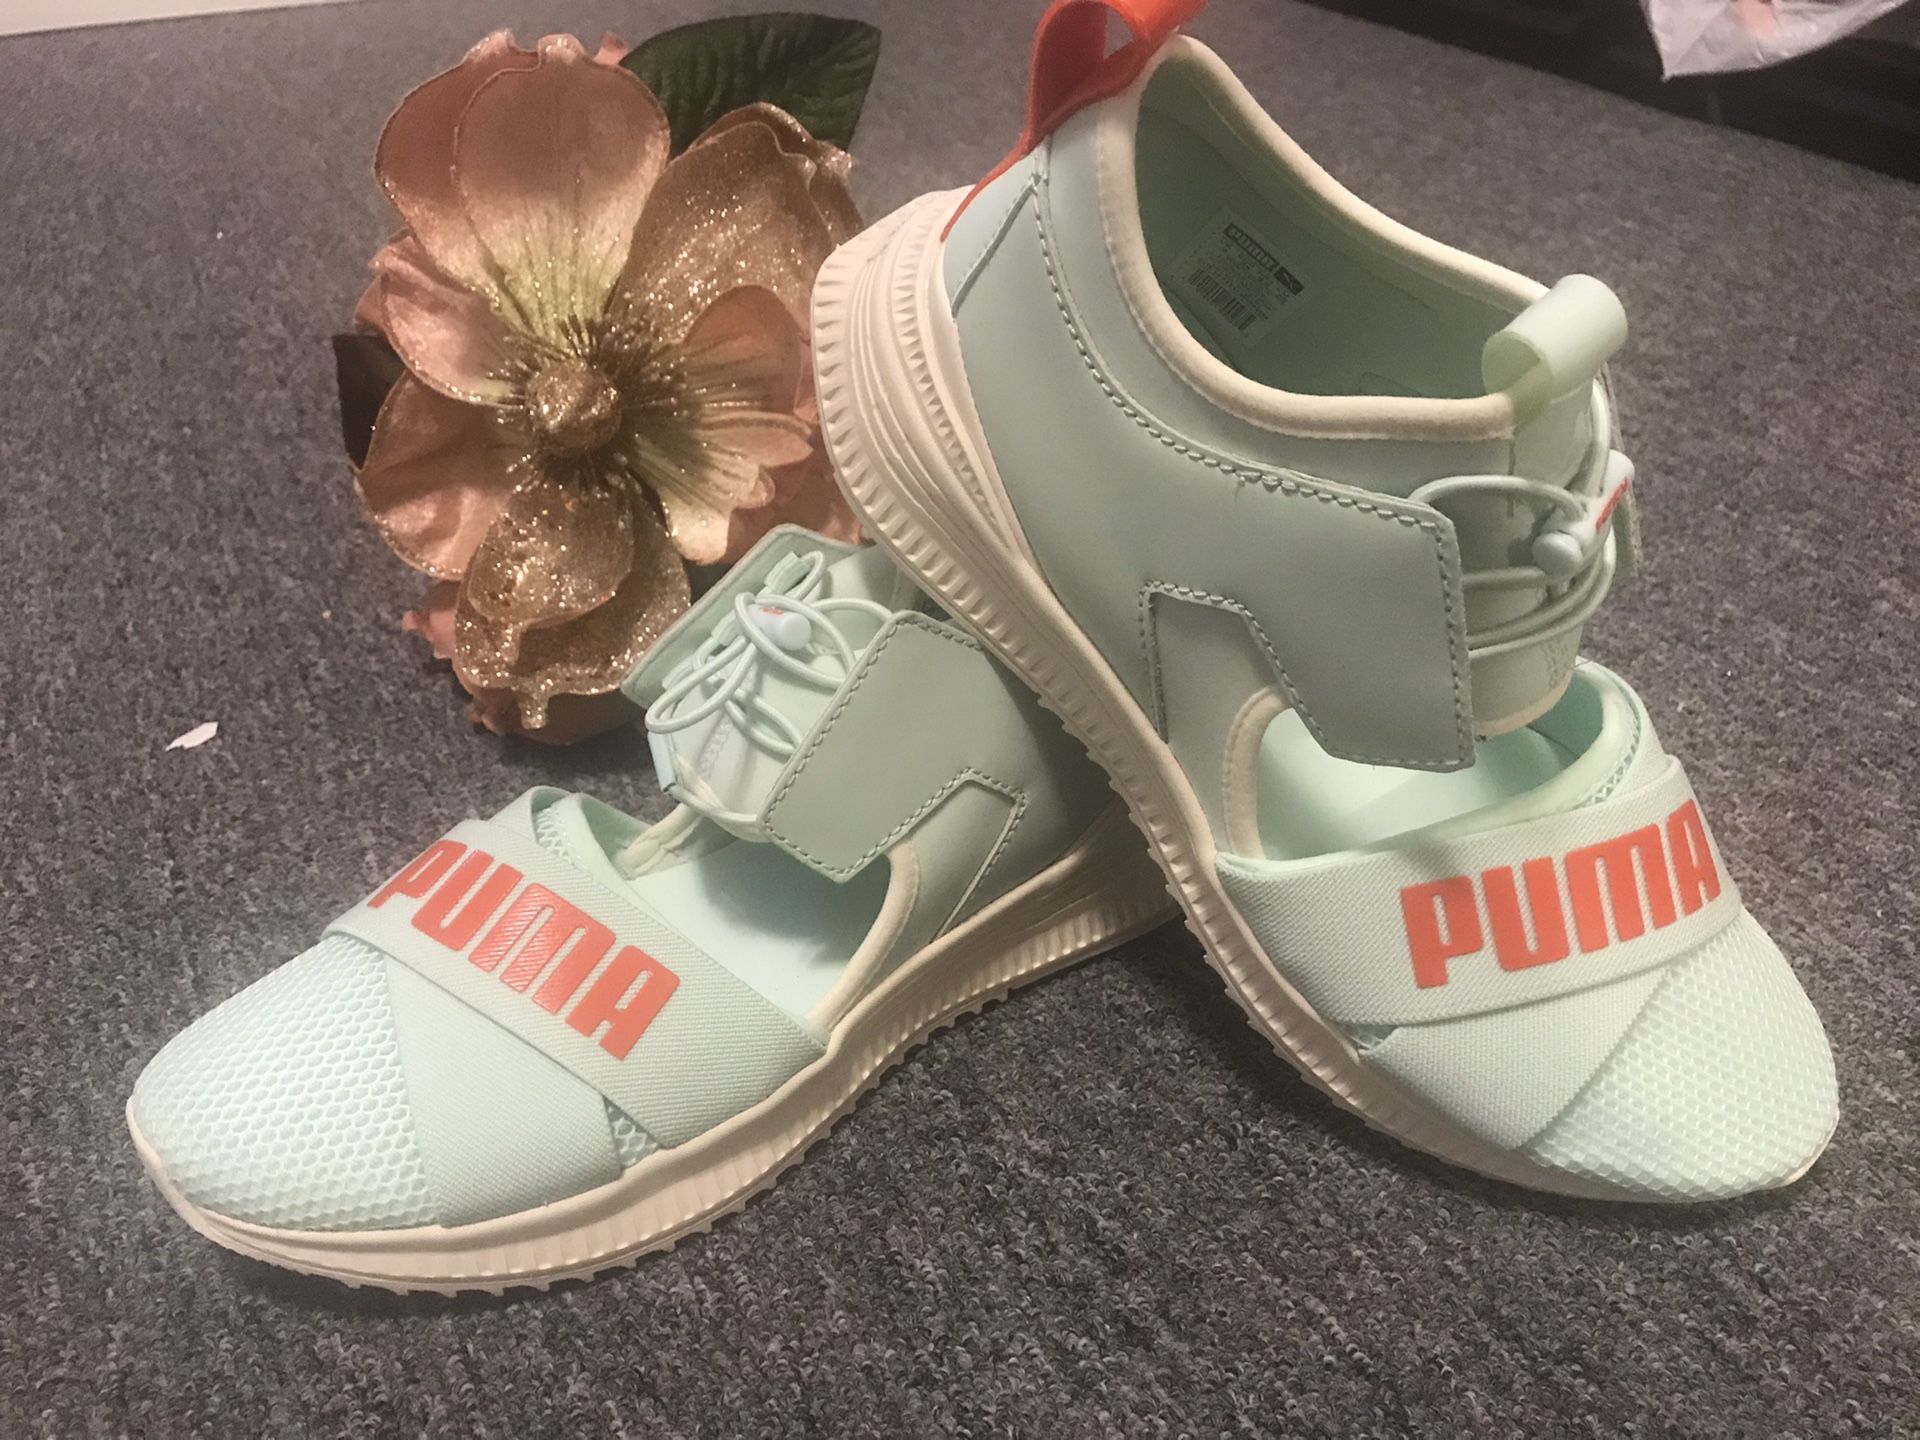 New puma women’s shoes size 8.5